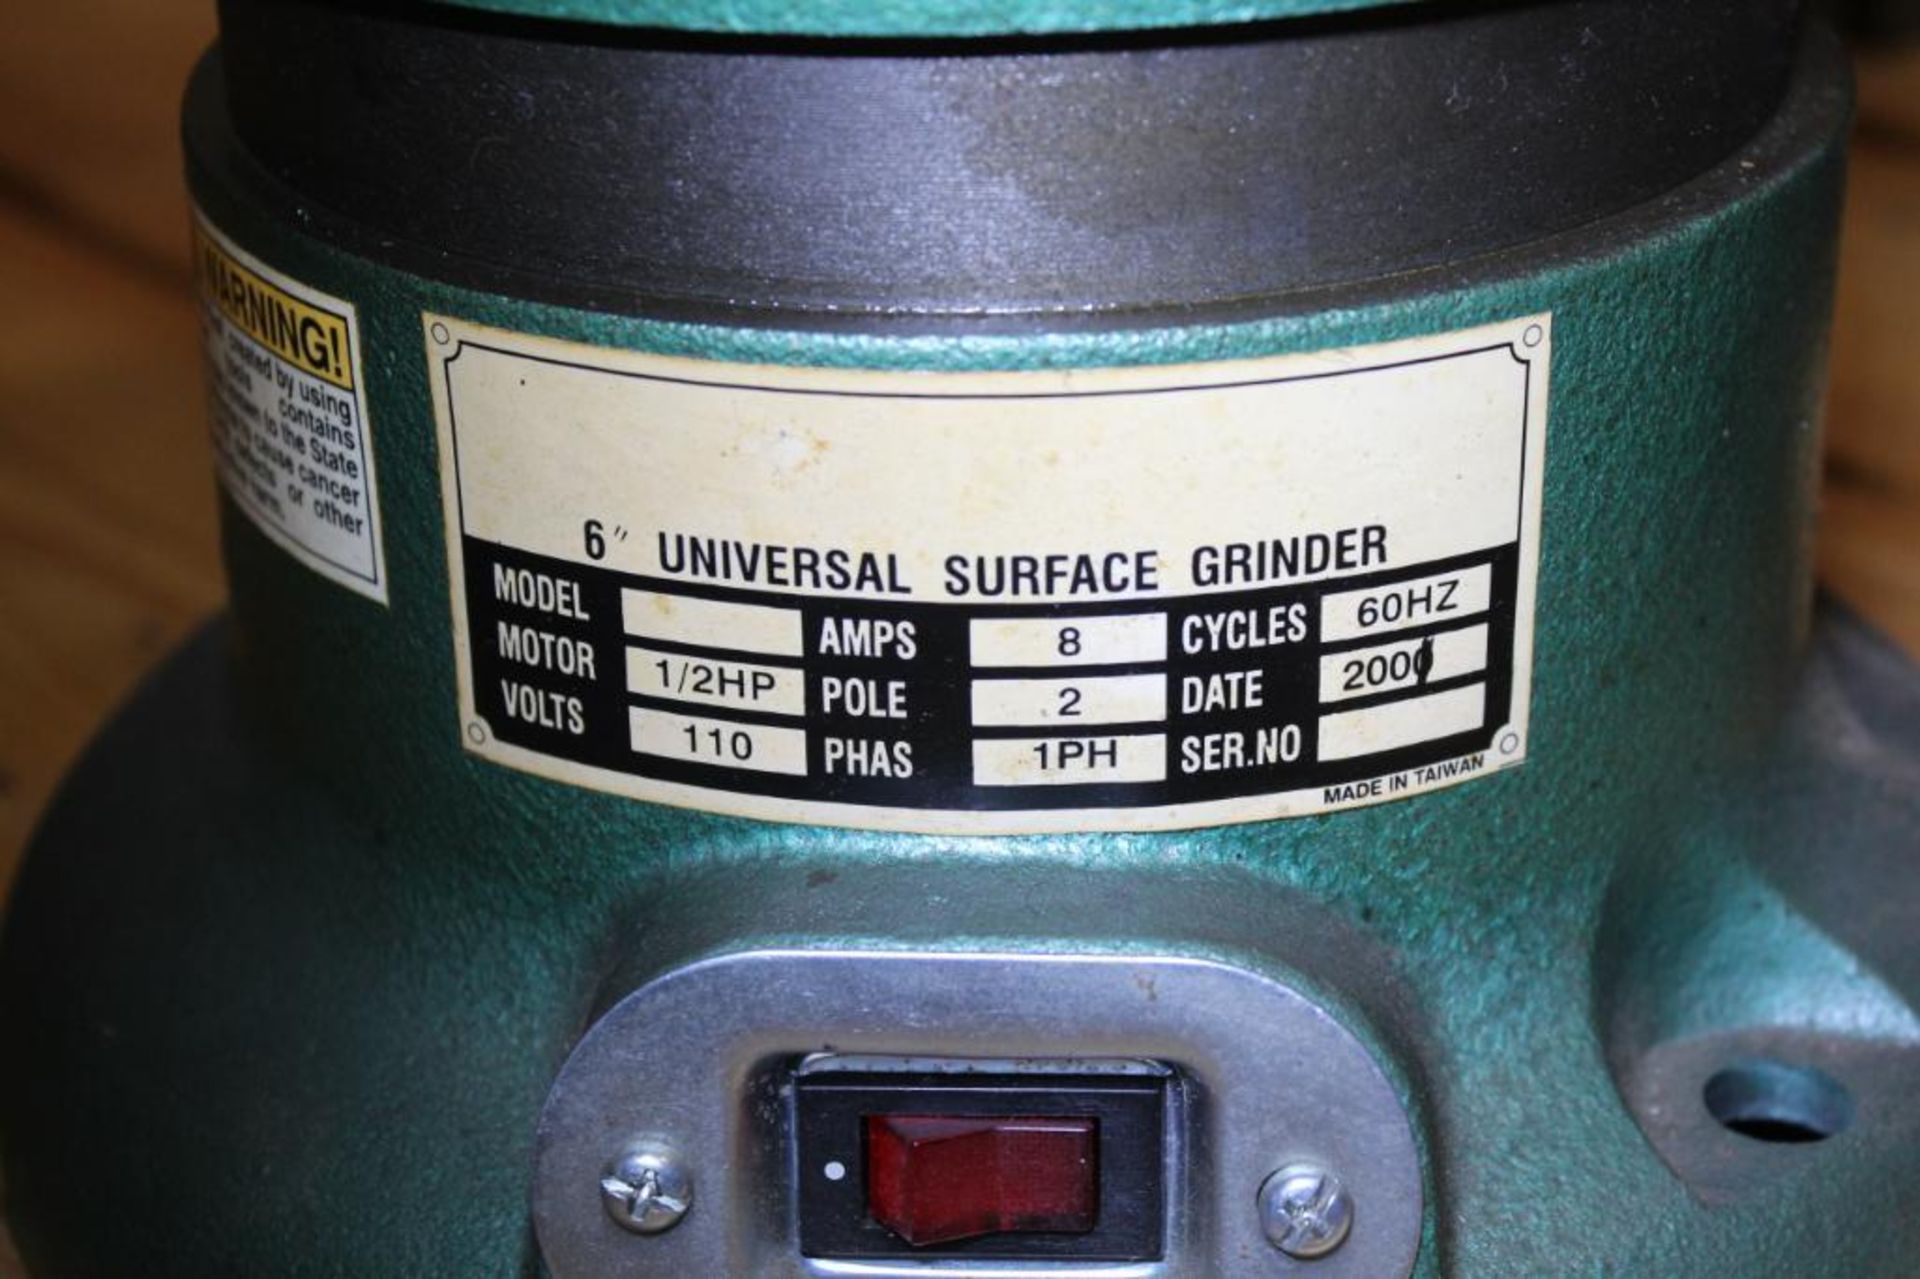 6" universal surface grinder - Image 5 of 6